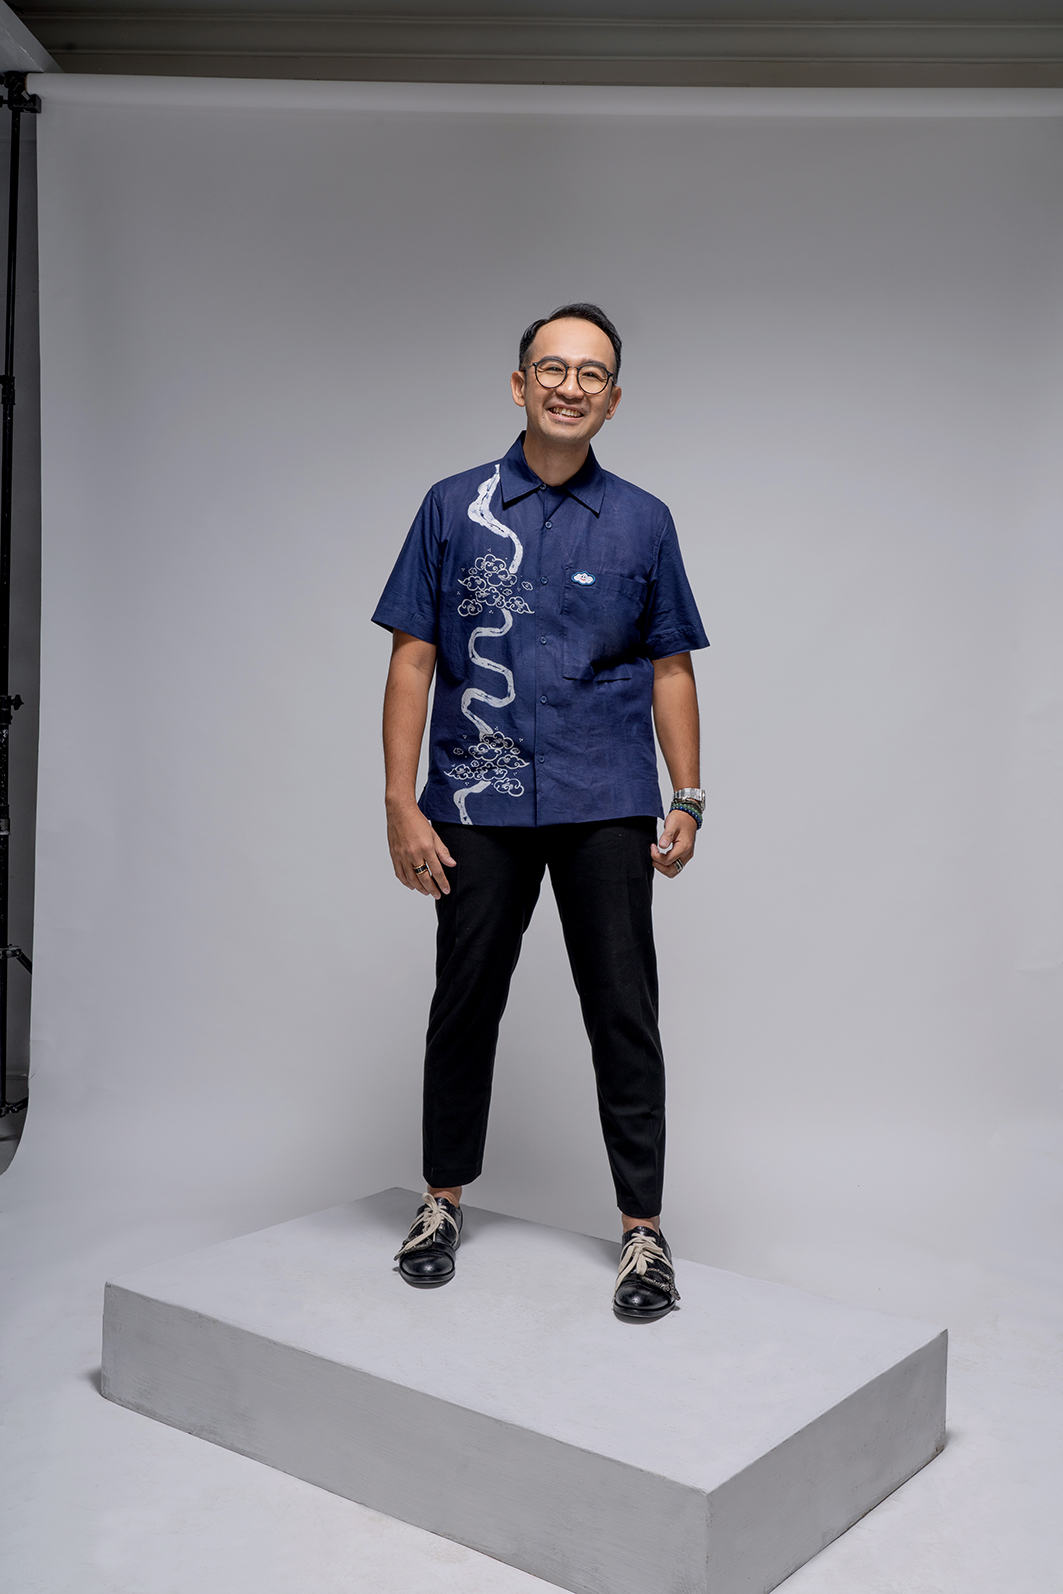 Batik Awan Harapan, kolaborasi Axton Salim, Ibu Rusun binaan JKT Creative, dan One Fine Sky